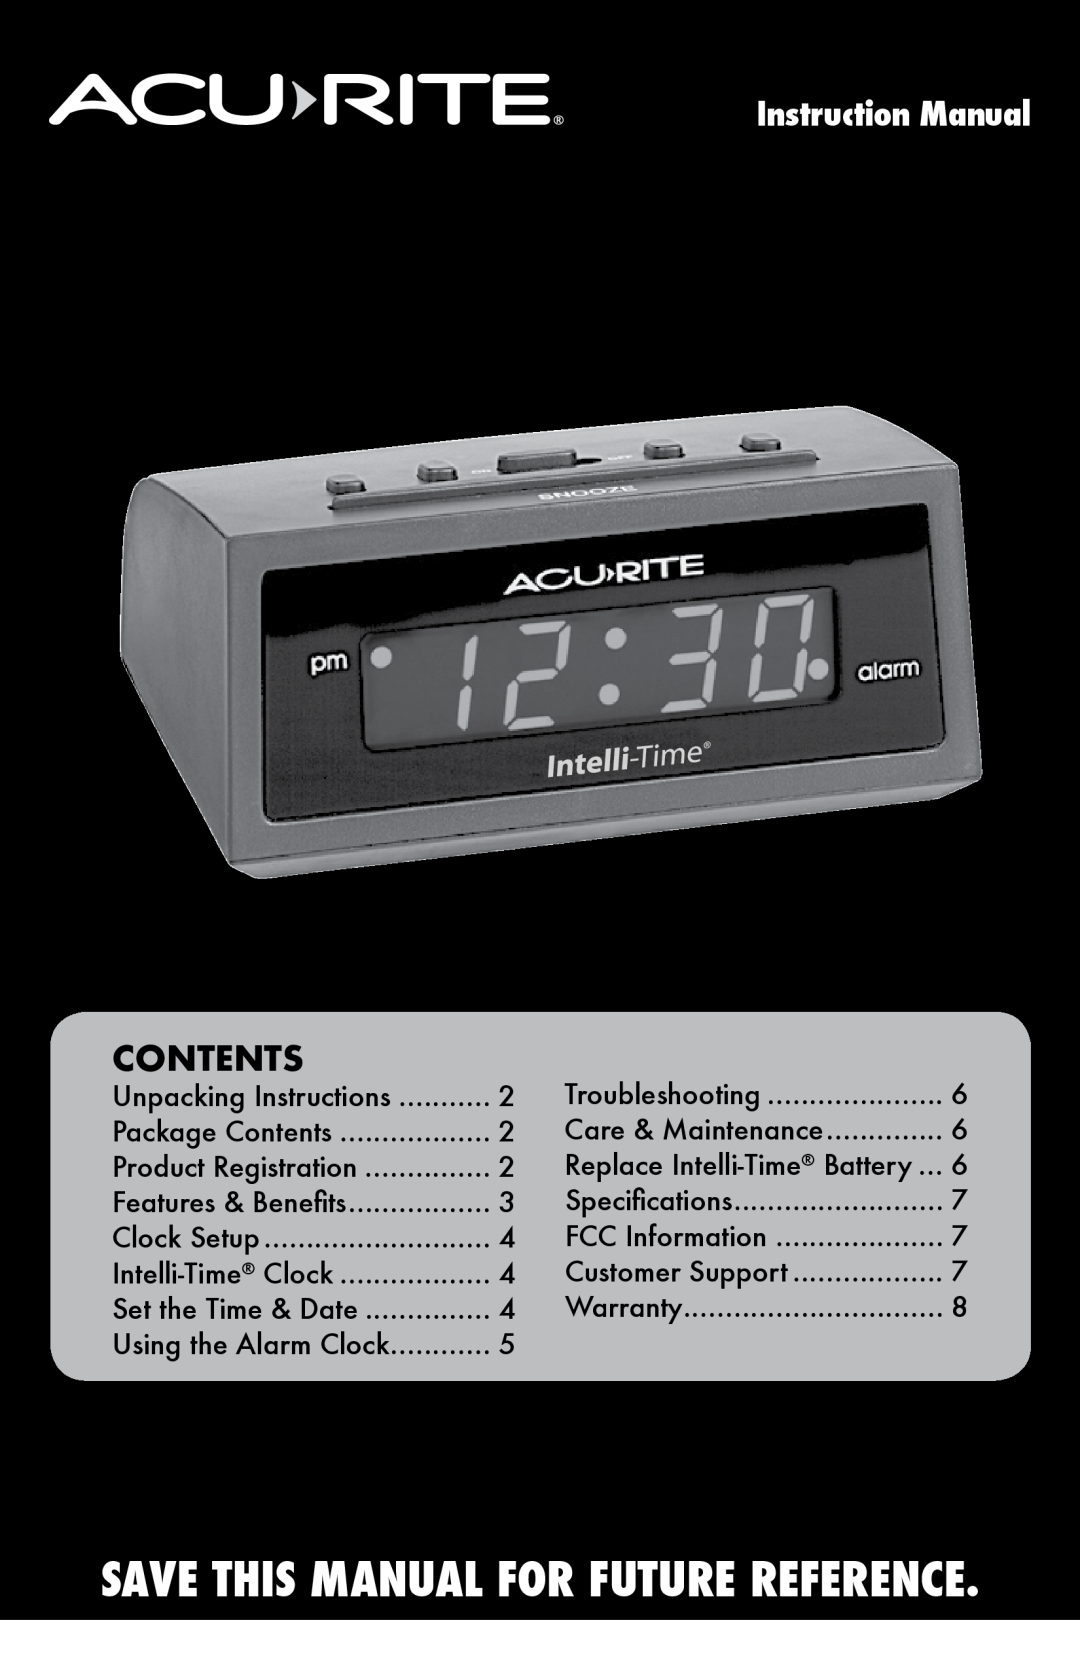 Acu-Rite 13002 instruction manual Contents, model 13001, Instruction Manual, Intelli-Time Alarm Clock 